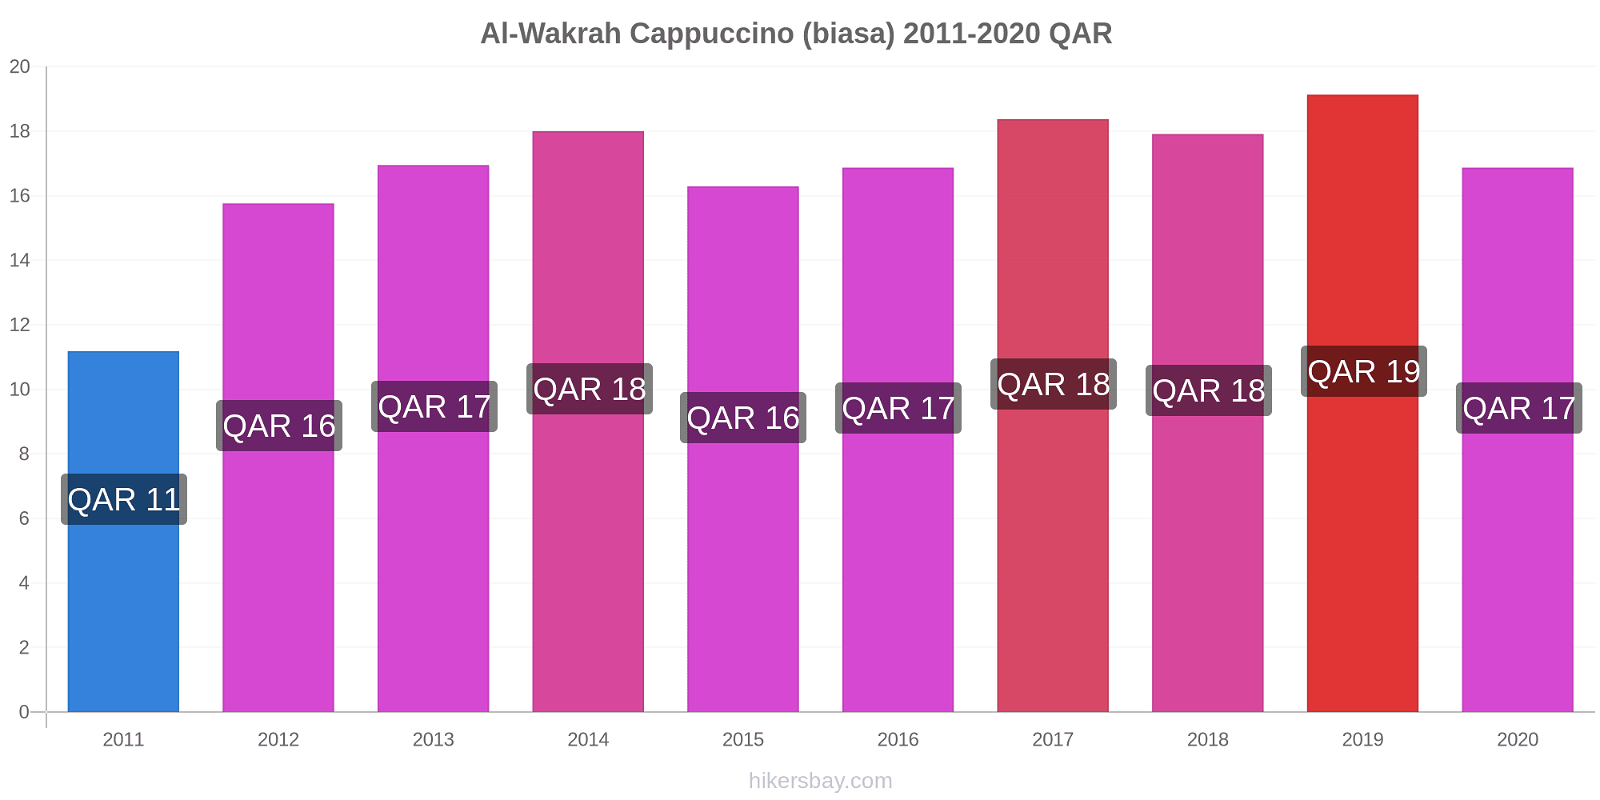 Al-Wakrah perubahan harga Cappuccino (biasa) hikersbay.com